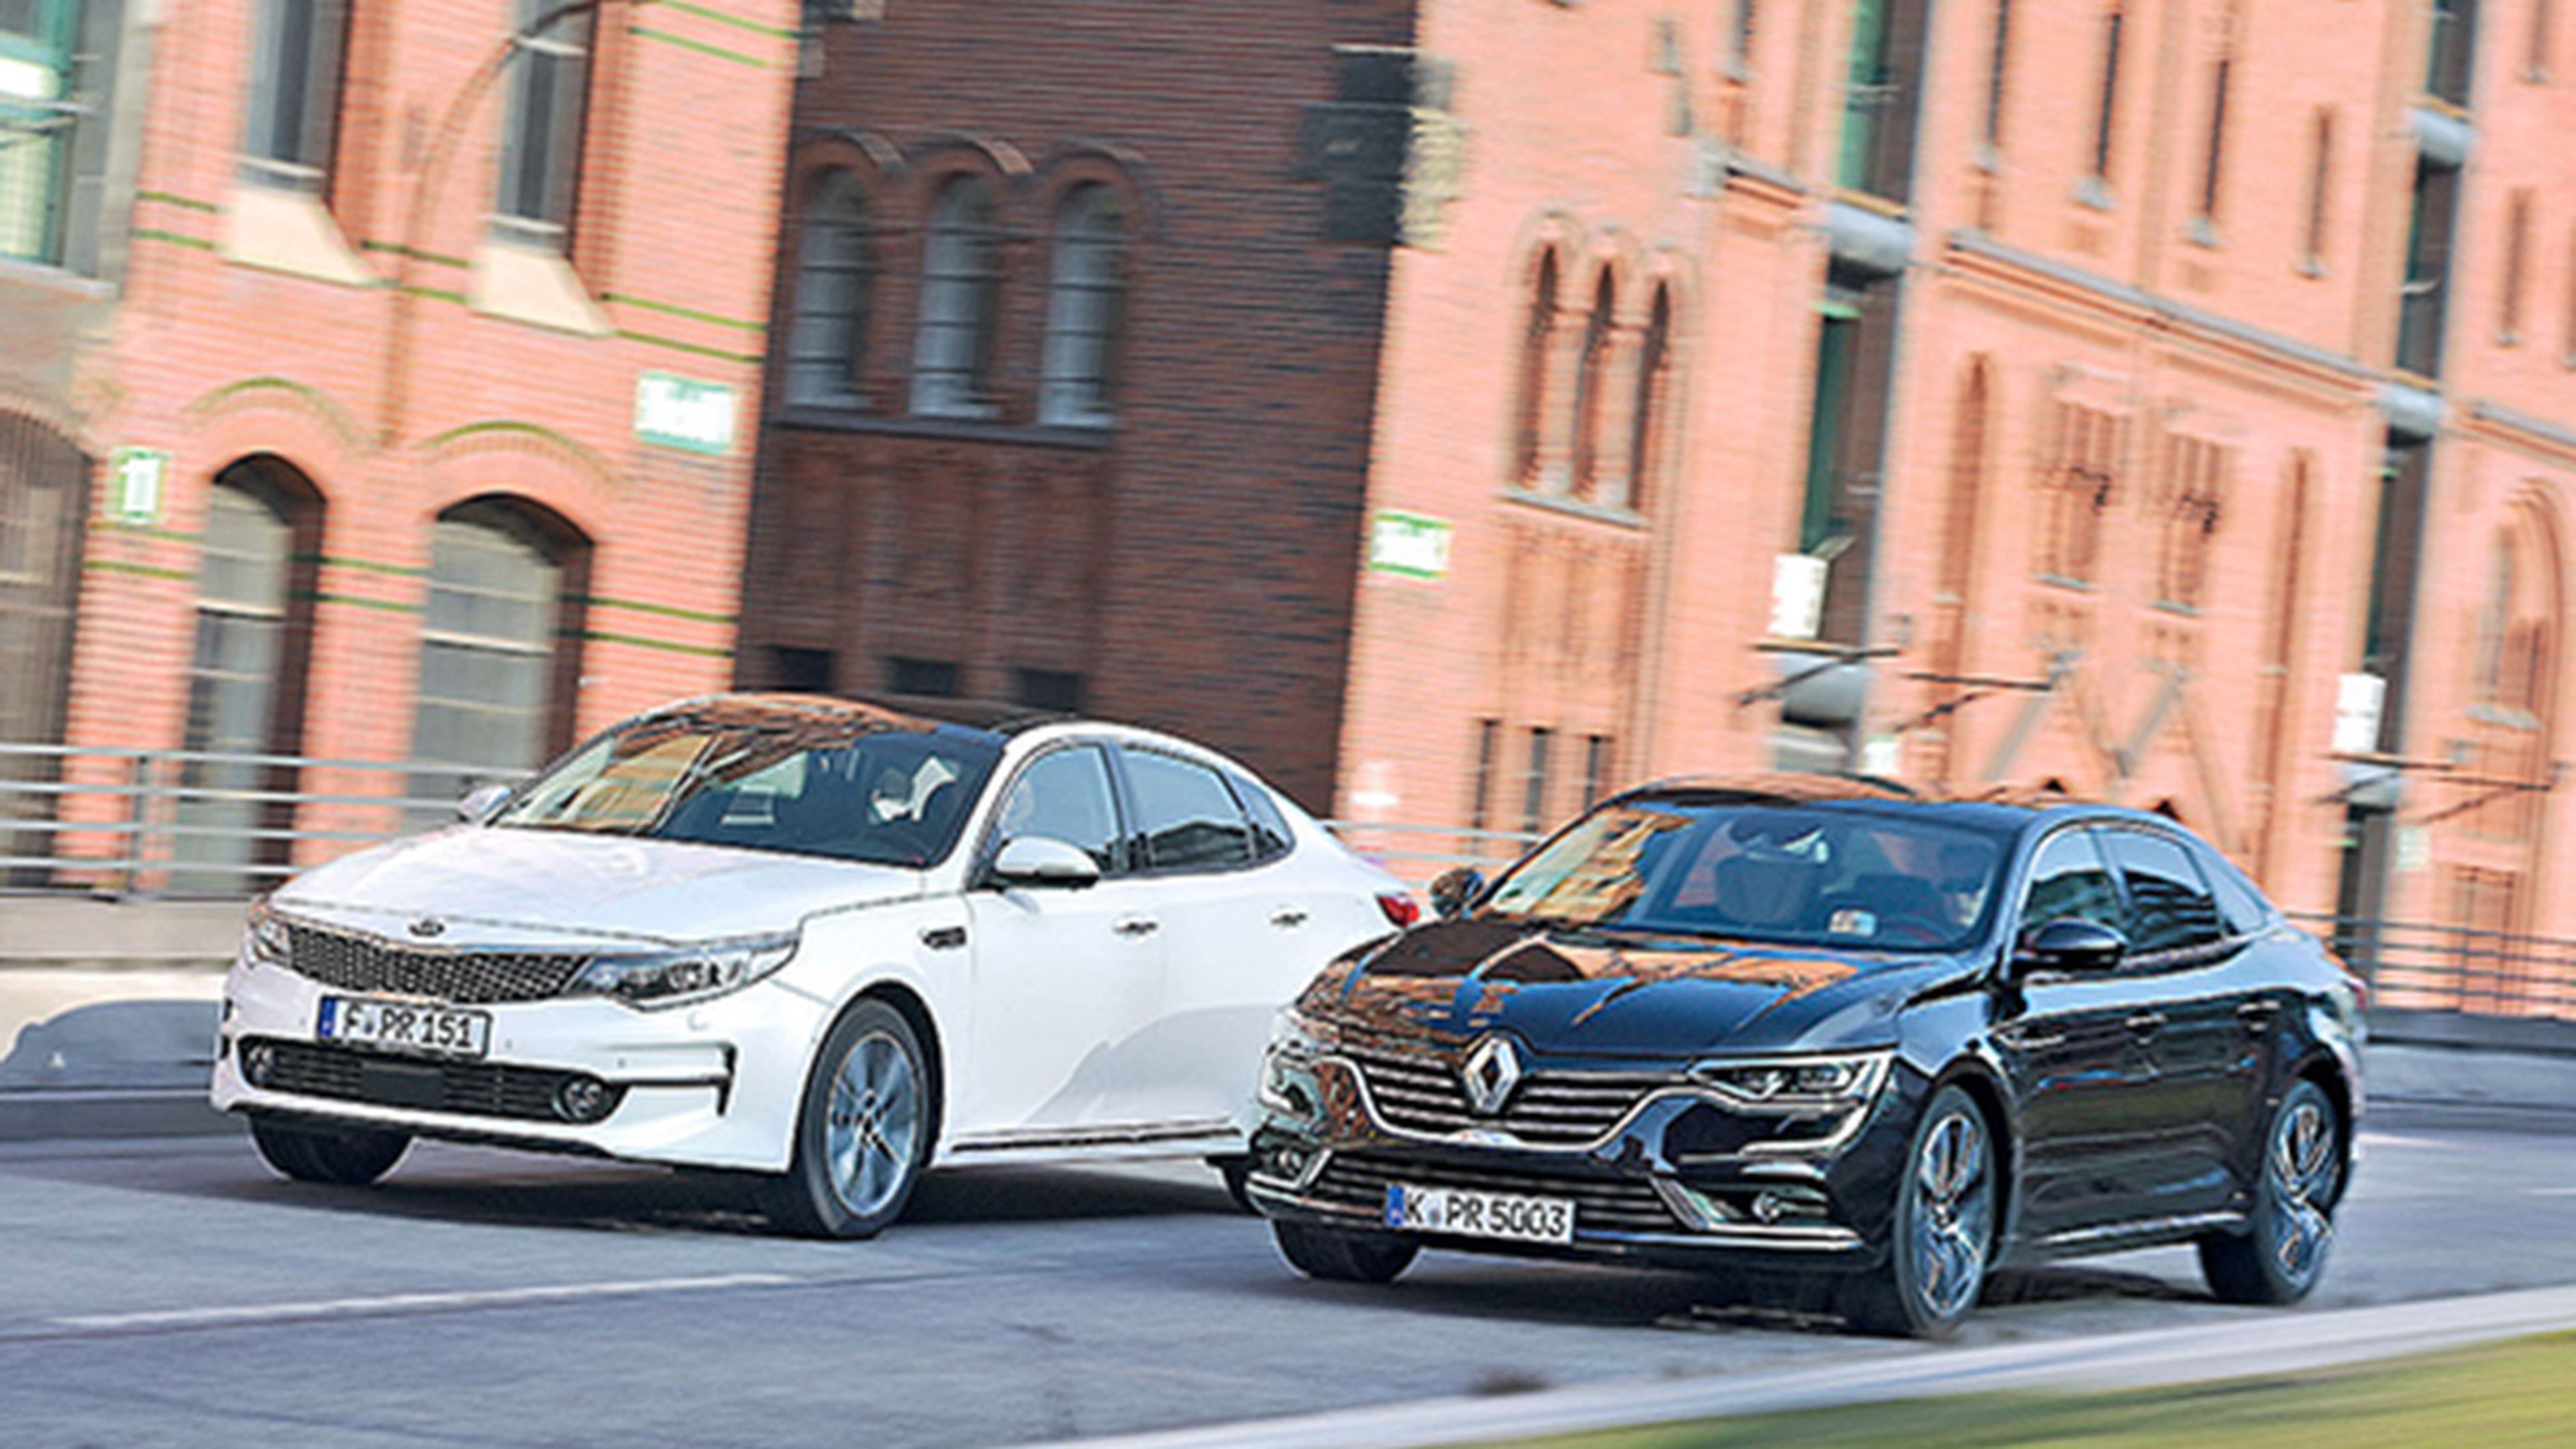 Cara a cara: Renault Talisman vs Kia Optima